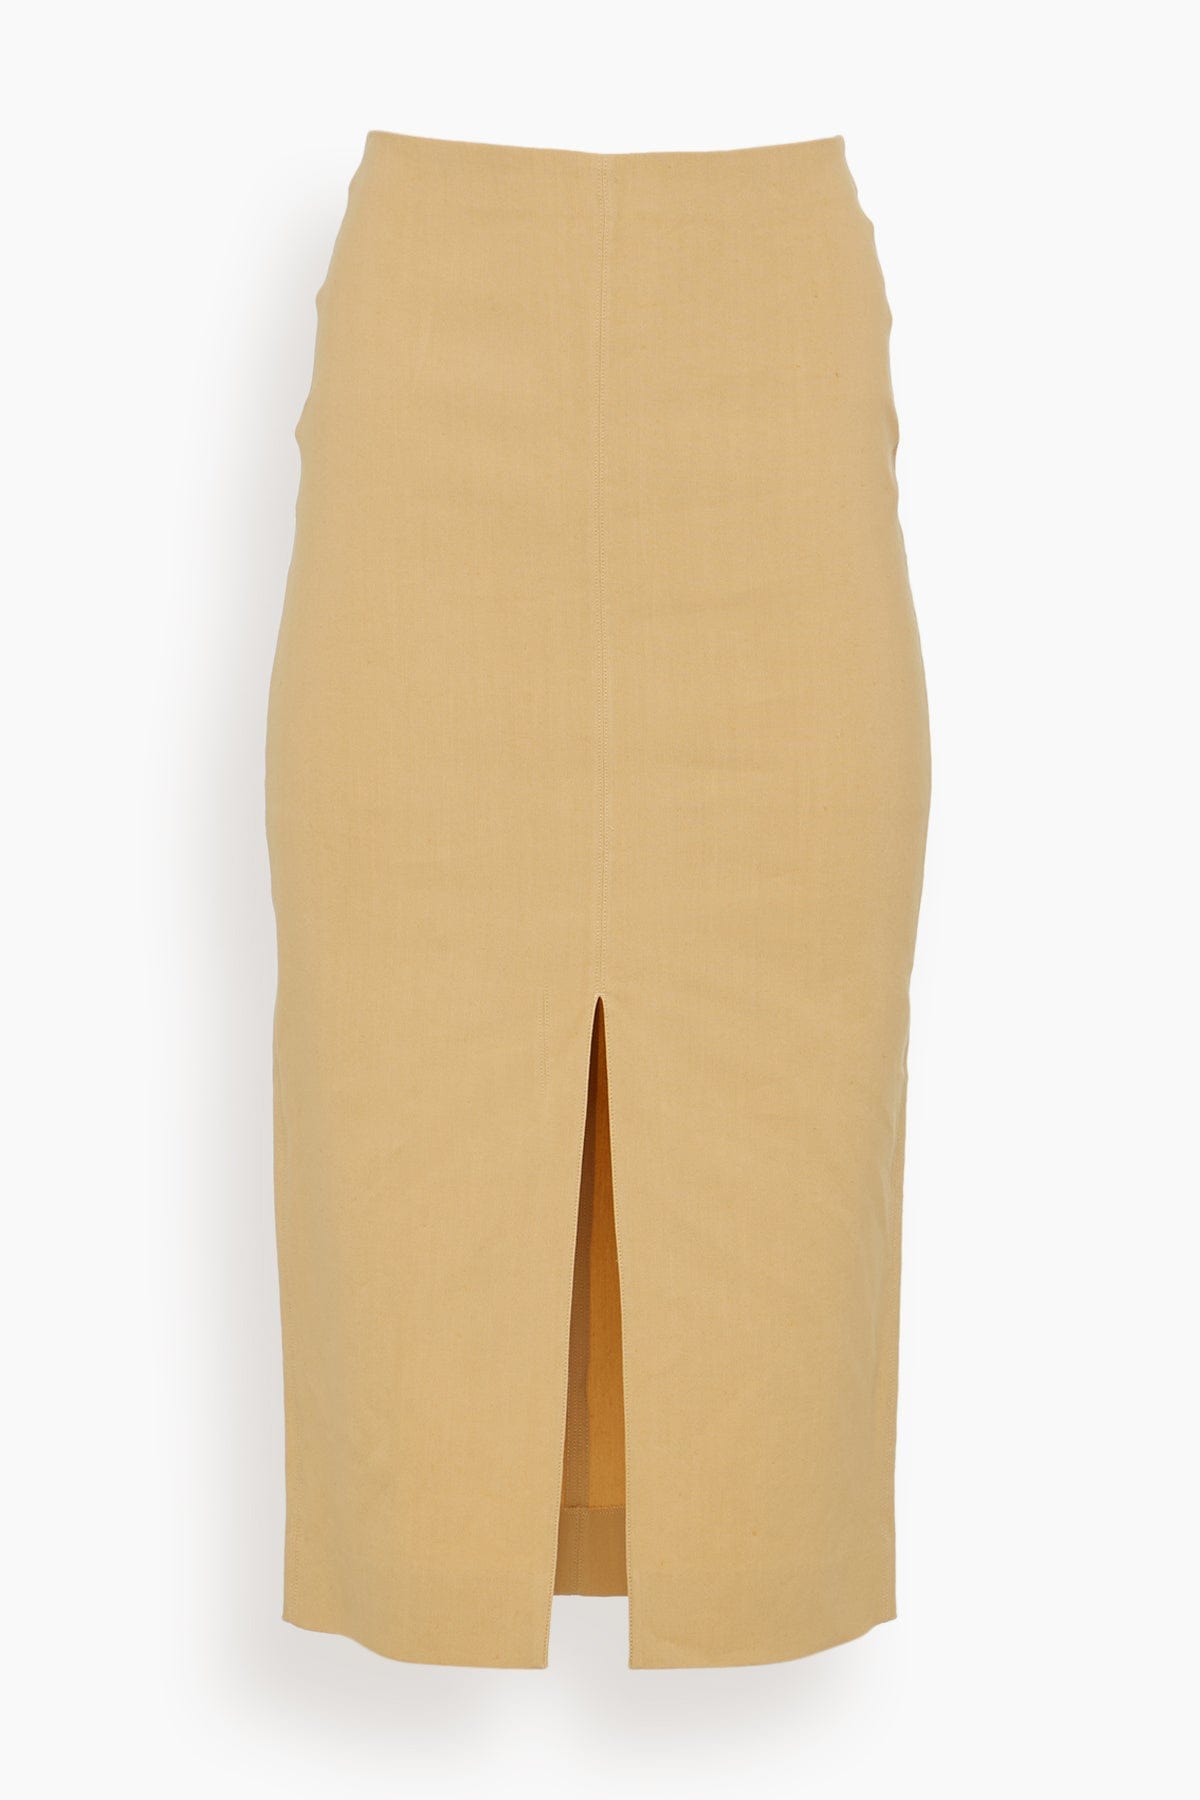 Isabel Marant Skirts Mills Skirt in Straw